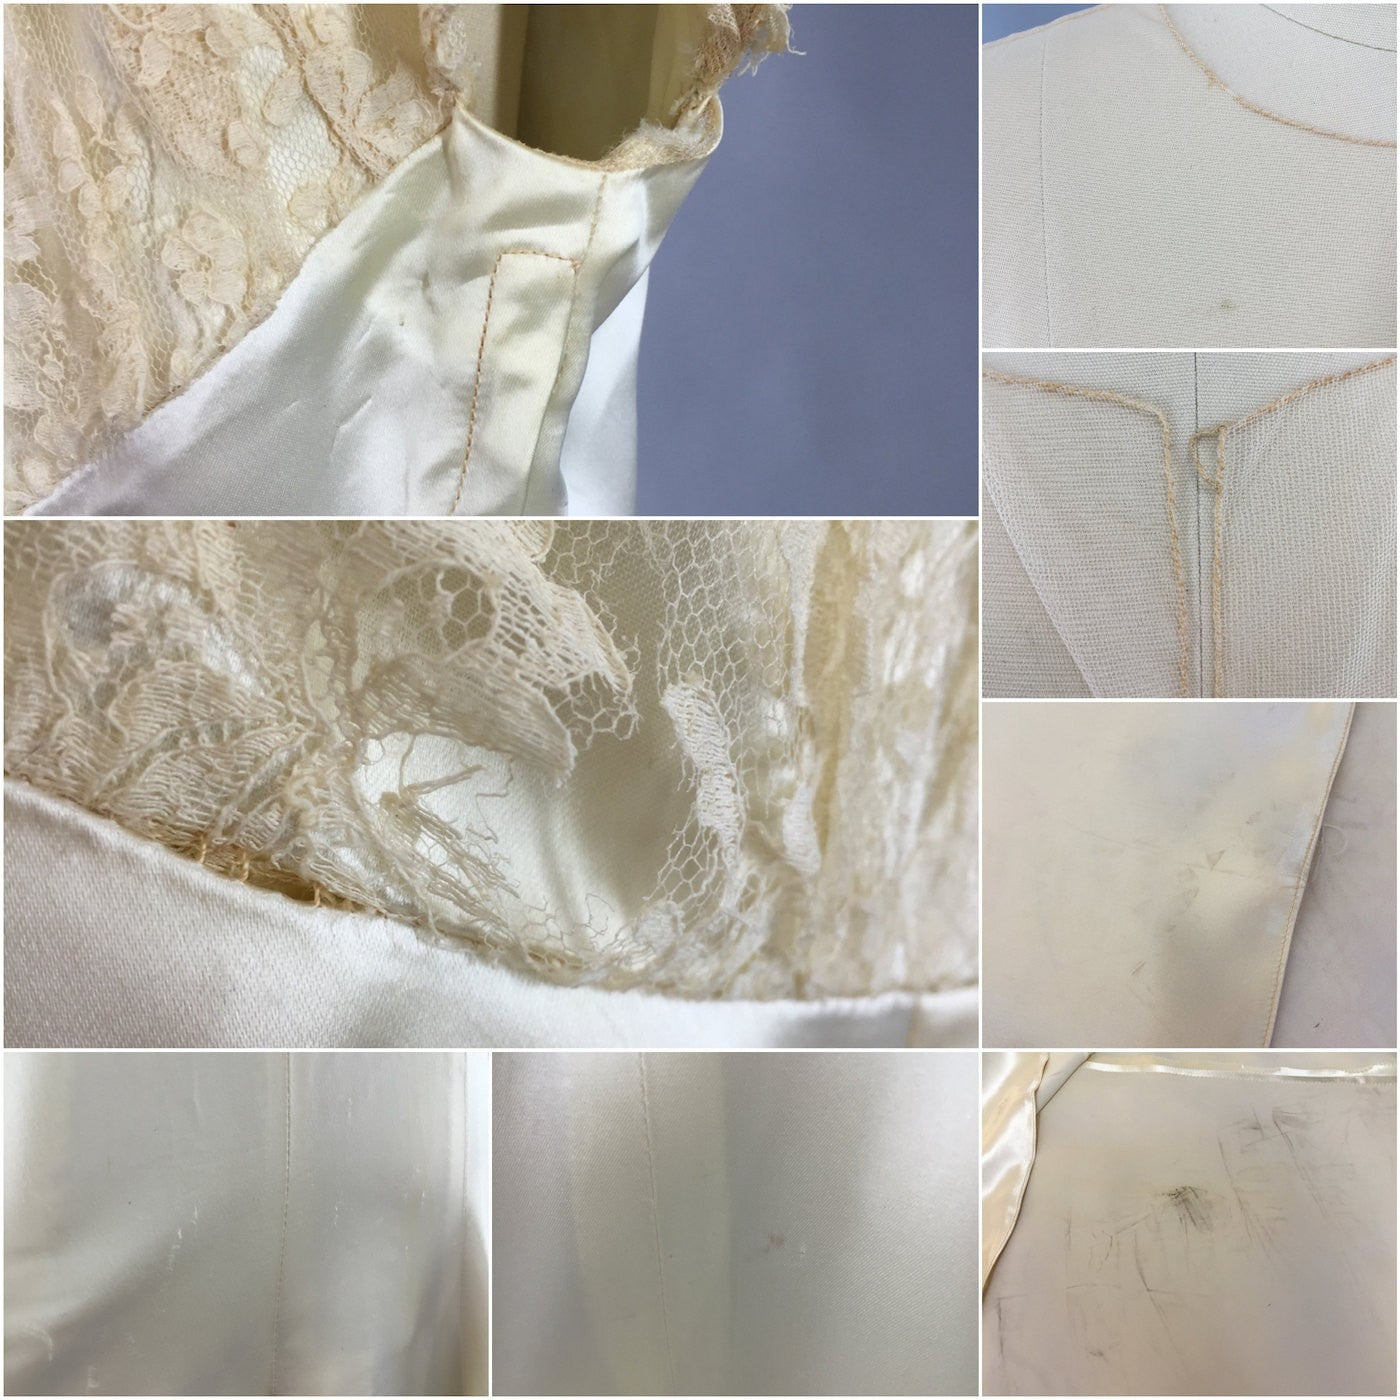 Vintage 1940s Wedding Dress / 40s Bridal Gown / Ivory Liquid Satin - ThisBlueBird